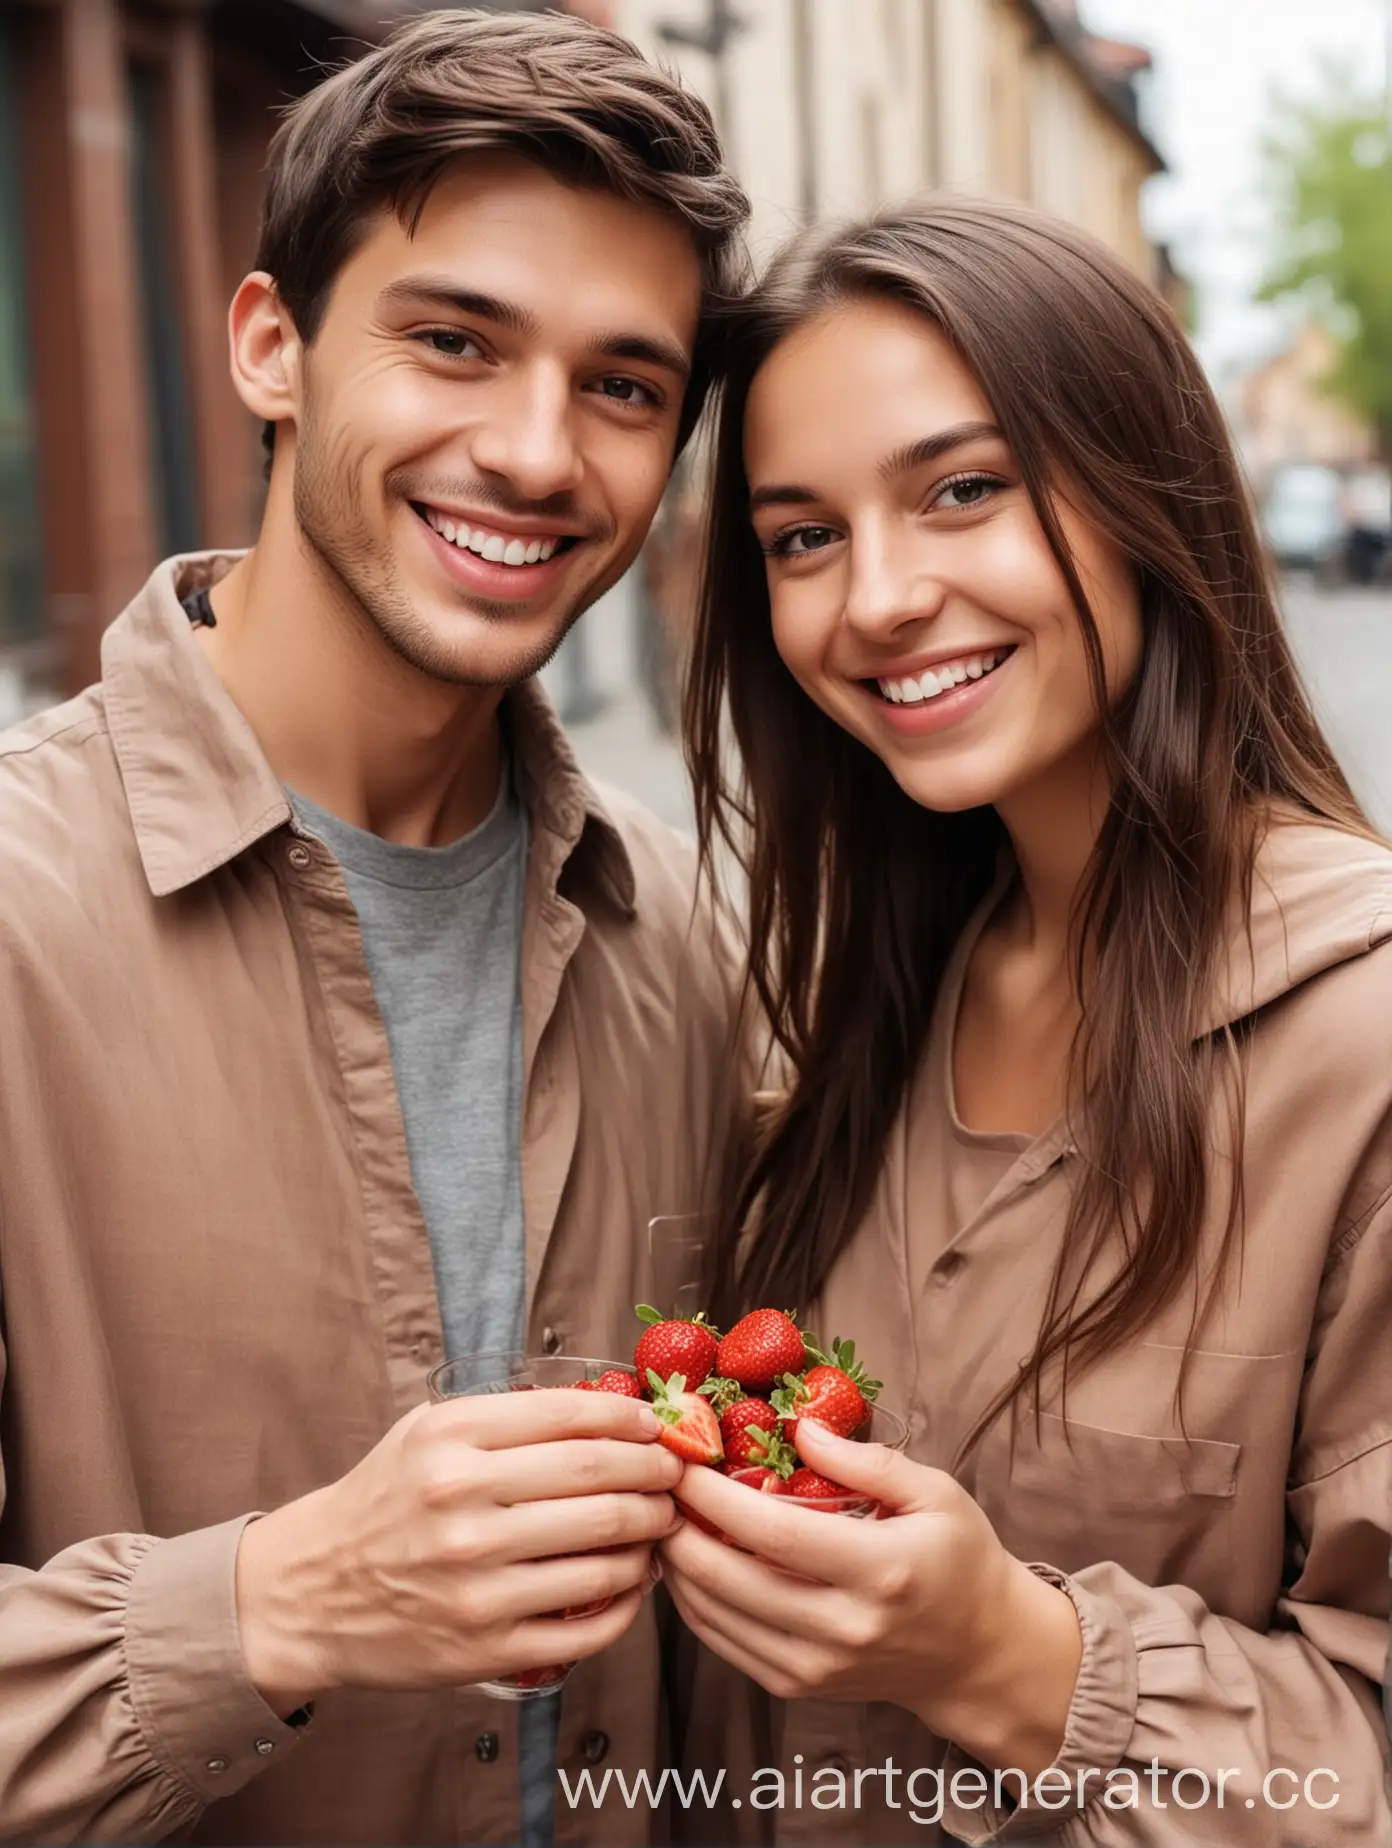 Joyful-Young-Couple-Strolling-with-ChocolateDipped-Strawberries